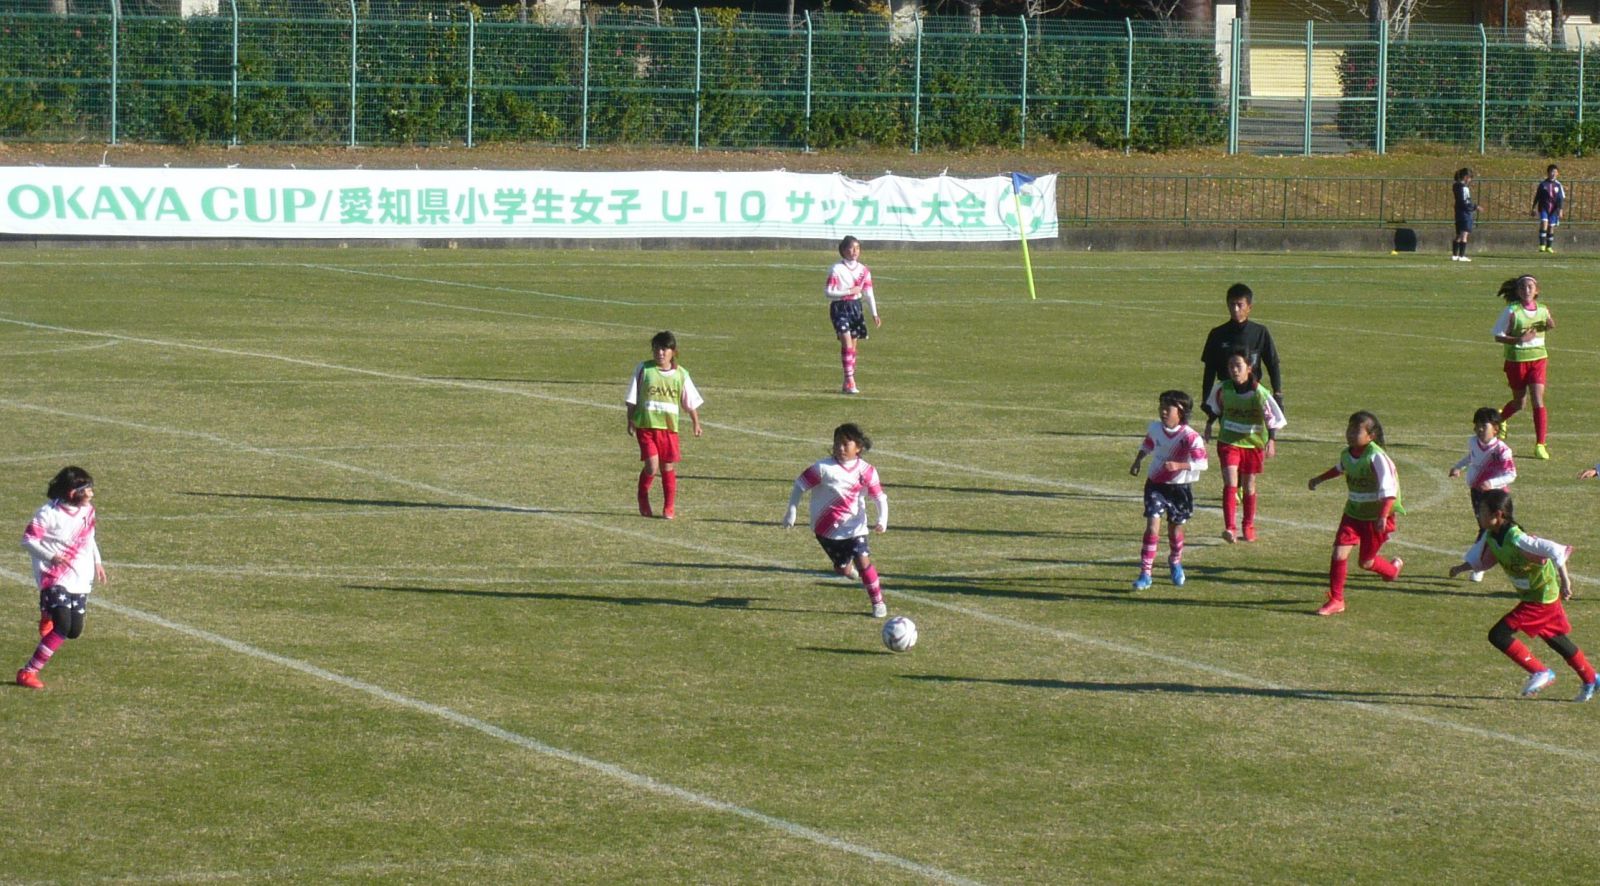 Aifa 19 Okaya Cup 第37回愛知県小学生女子u 10サッカー大会が開催されました 岡谷鋼機株式会社